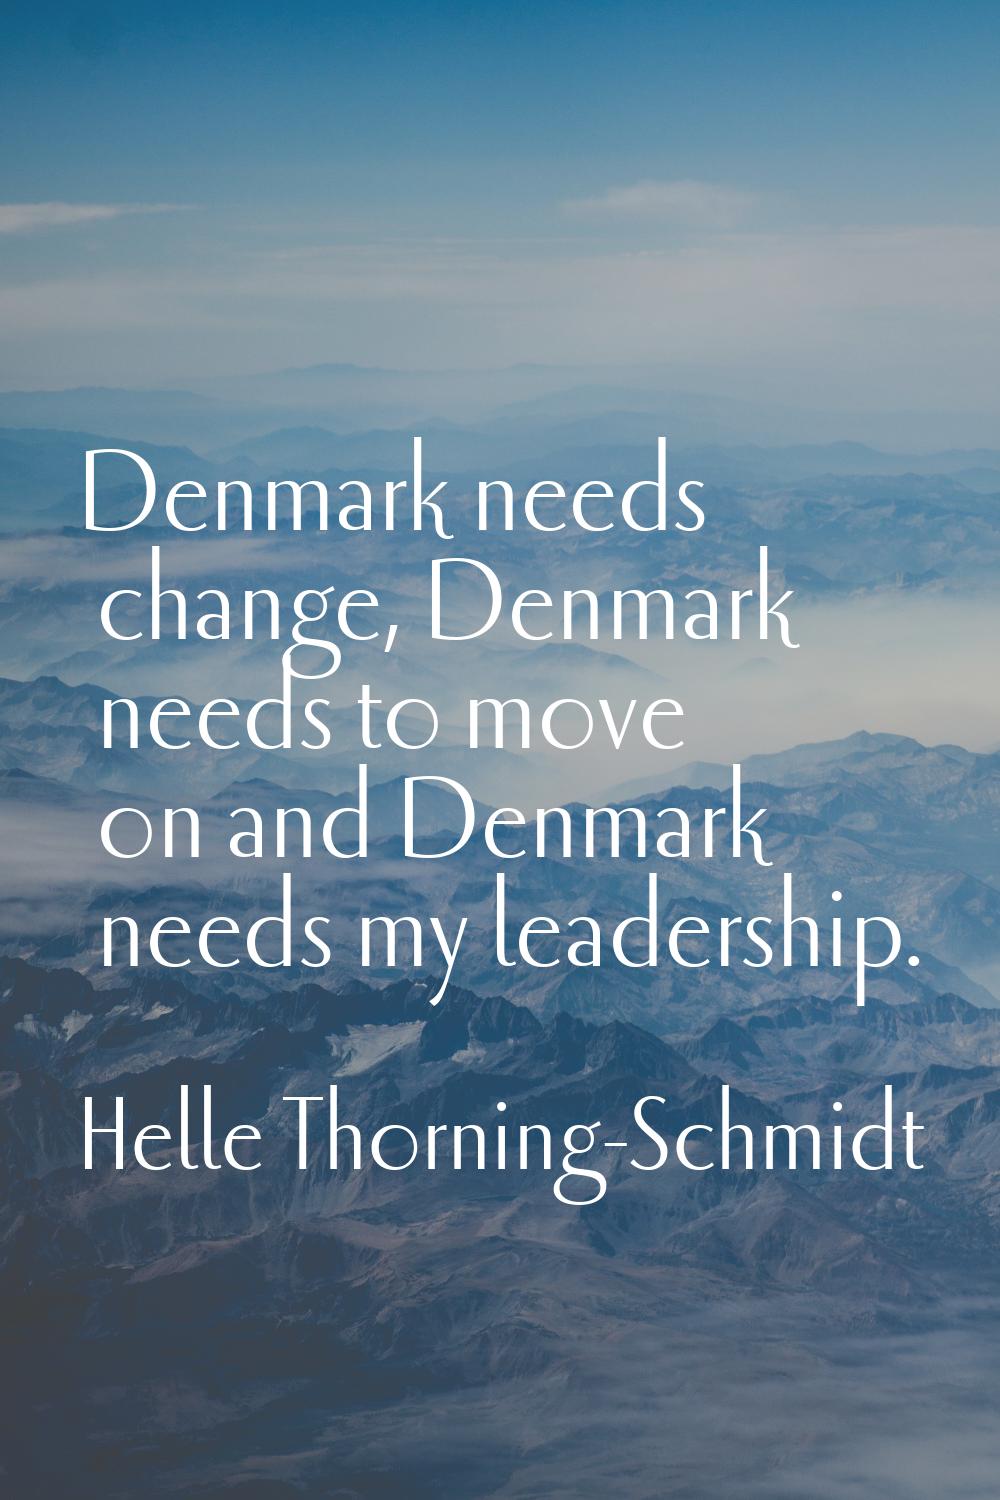 Denmark needs change, Denmark needs to move on and Denmark needs my leadership.